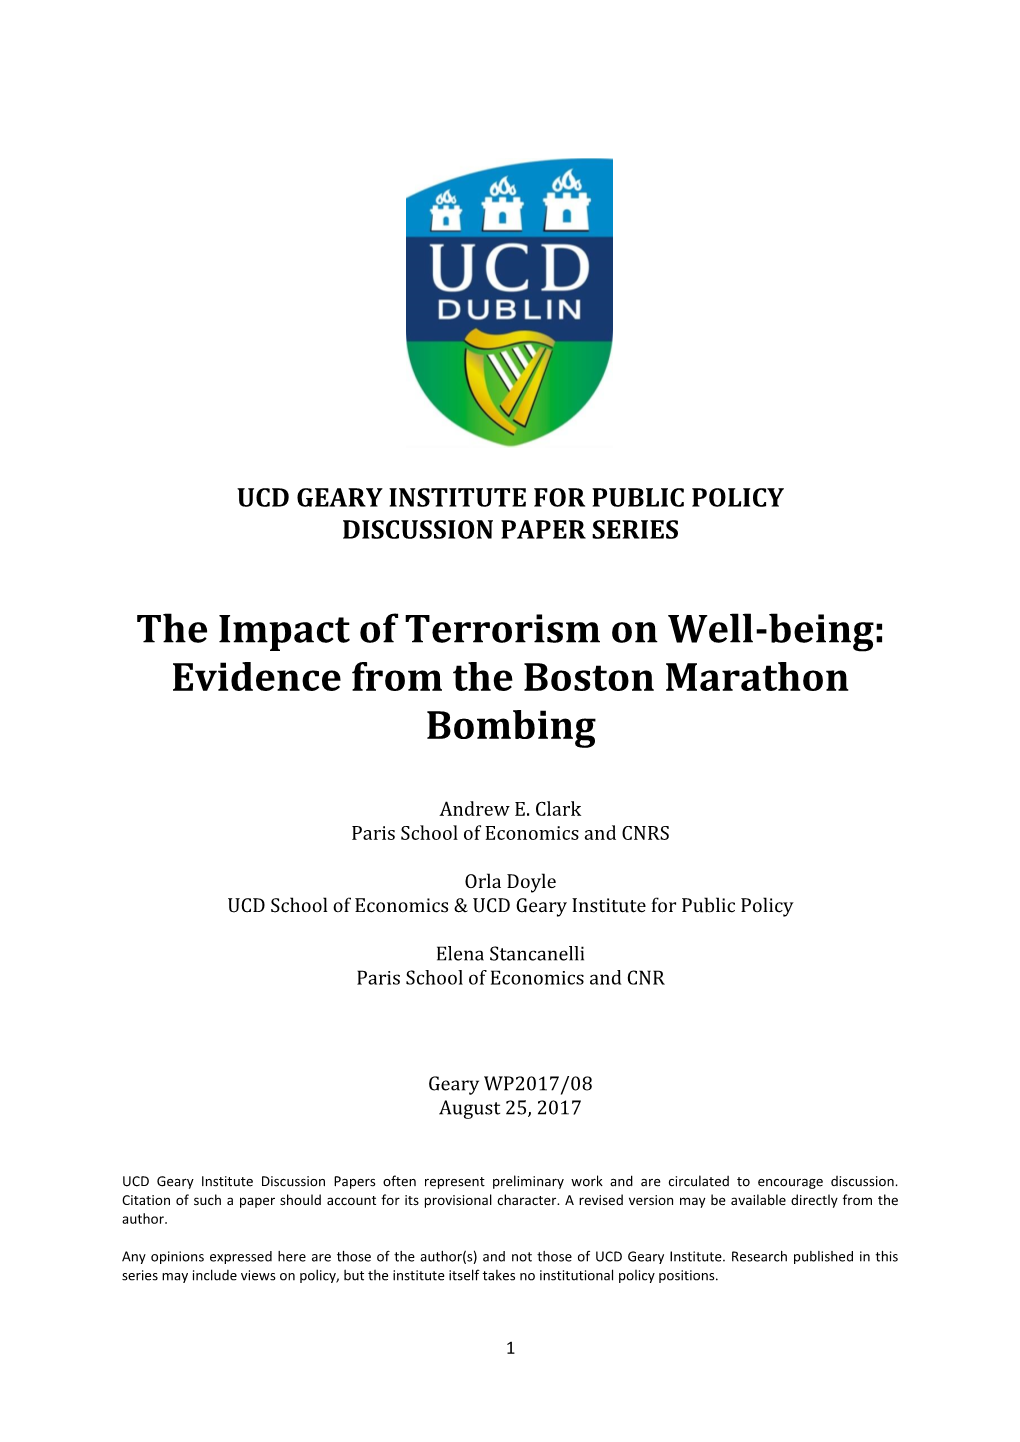 Evidence from the Boston Marathon Bombing